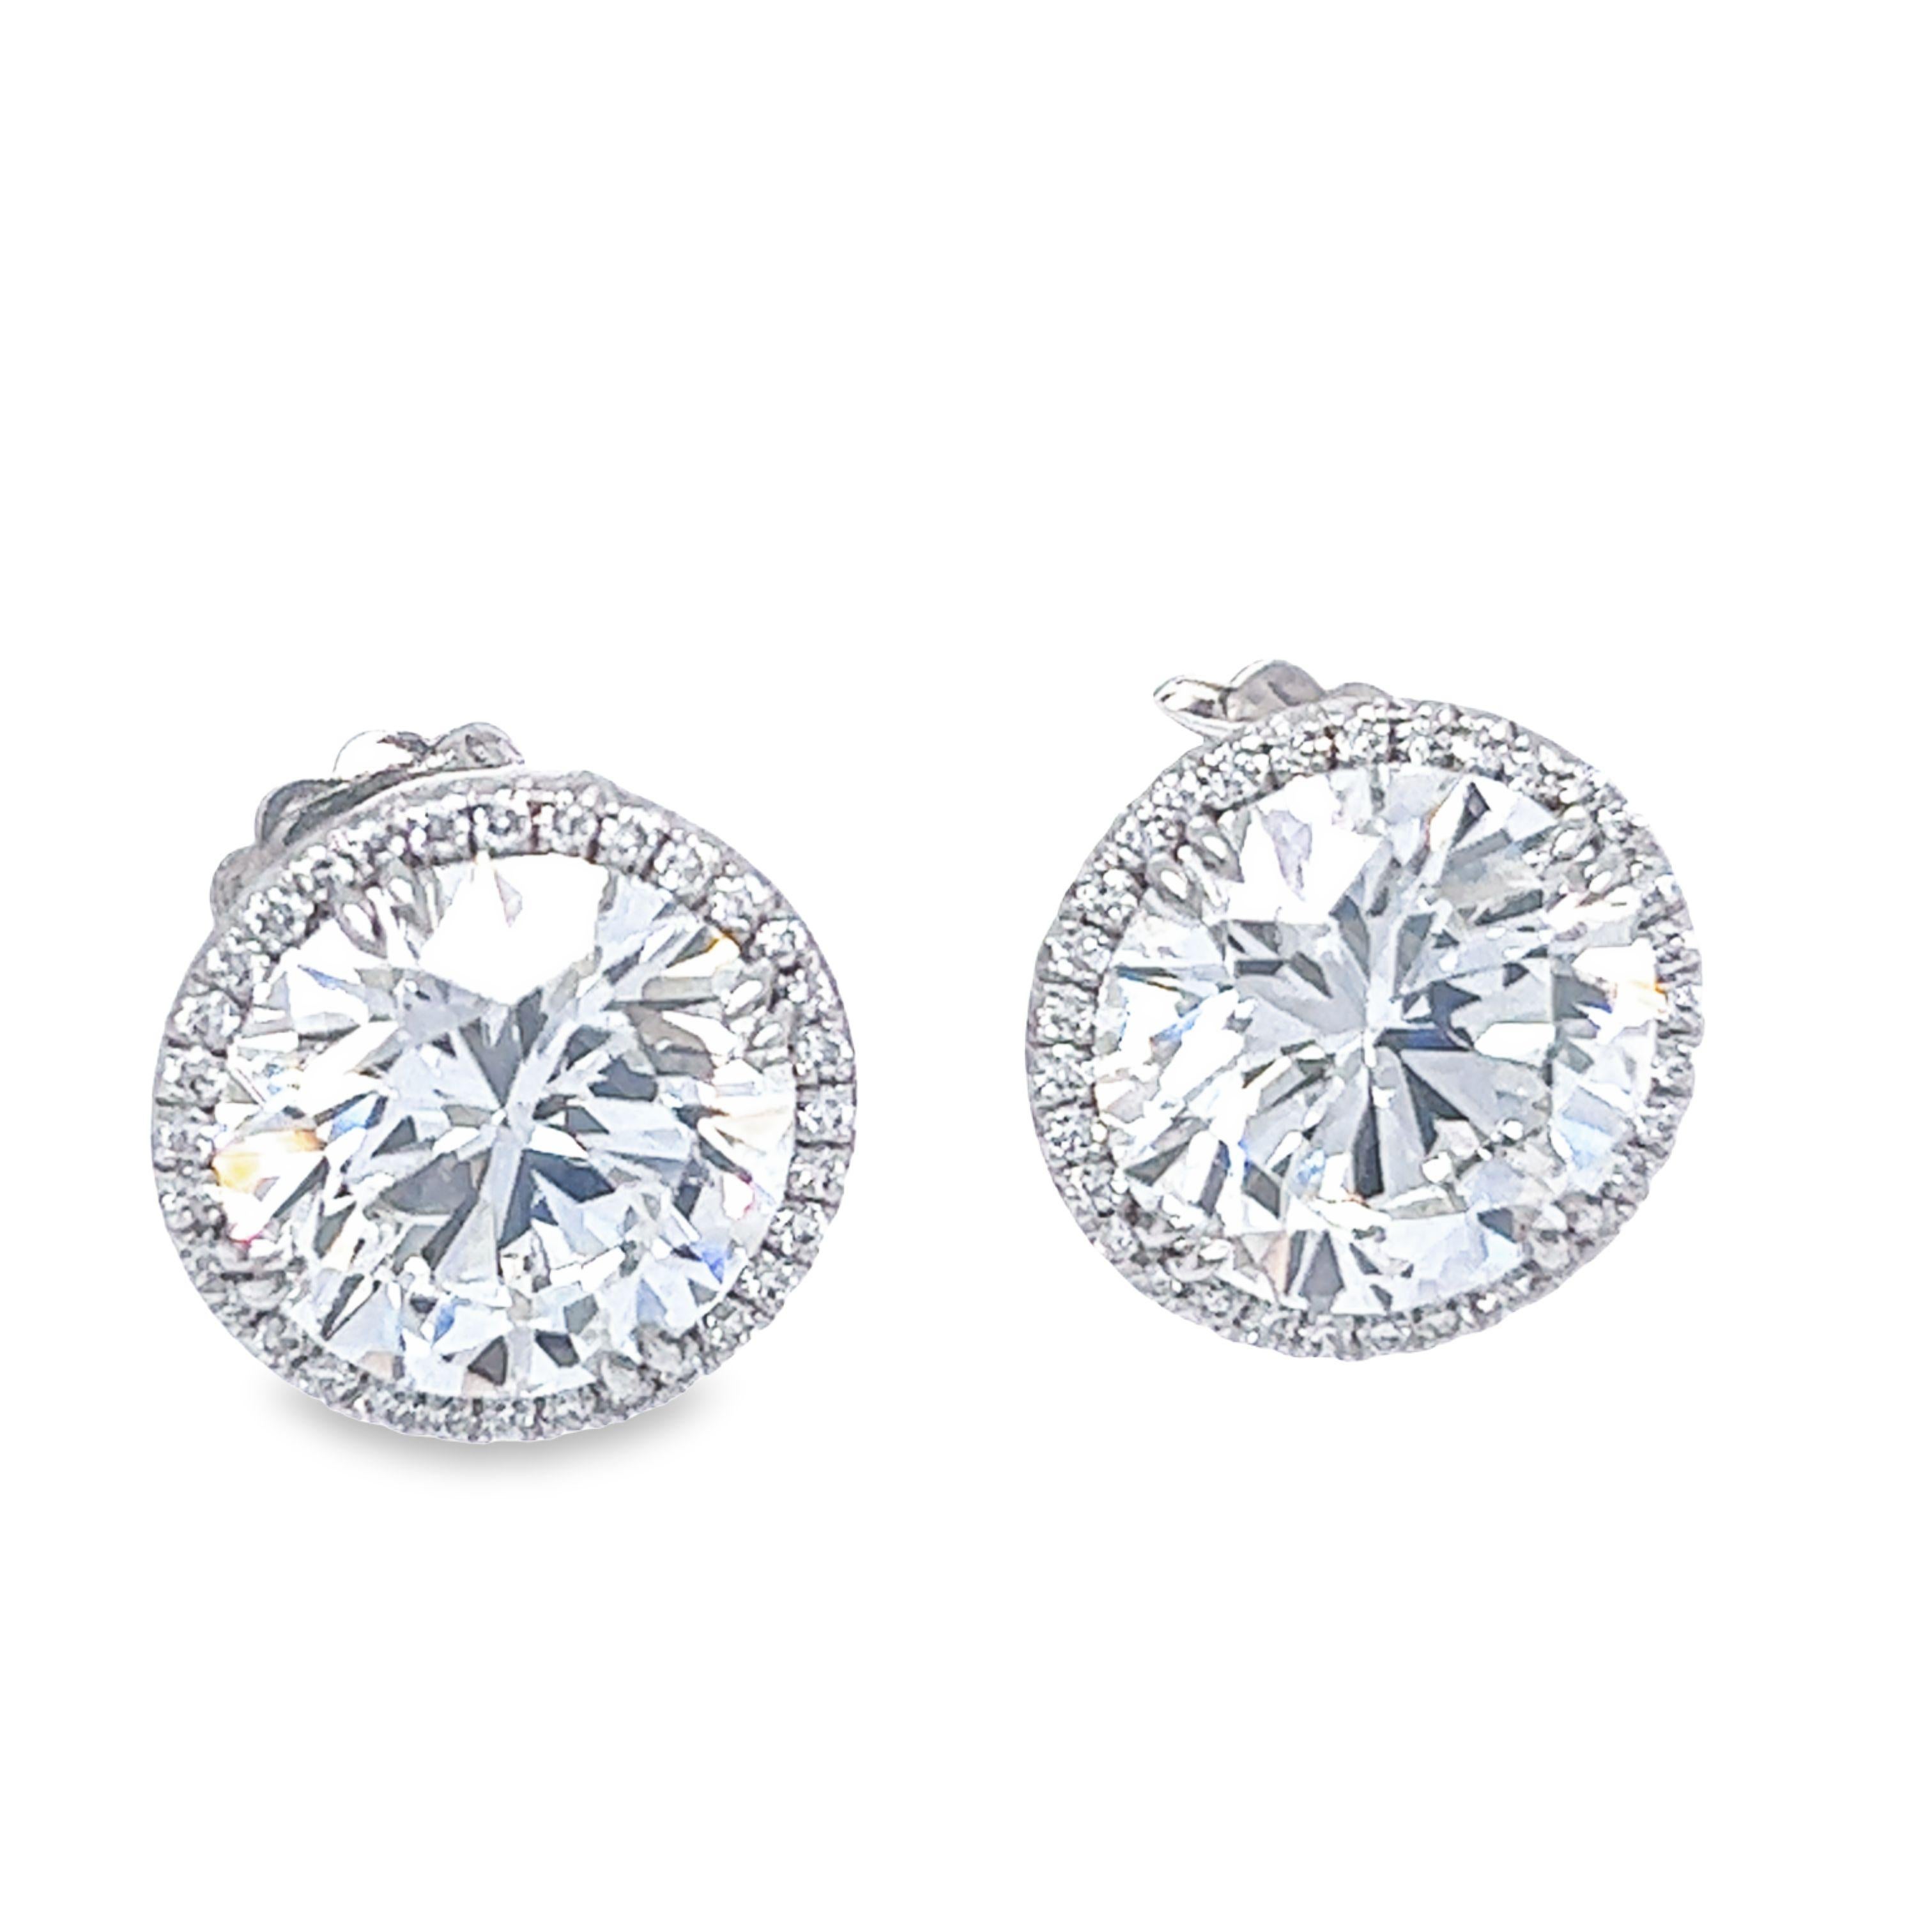 20 carat diamond earrings price